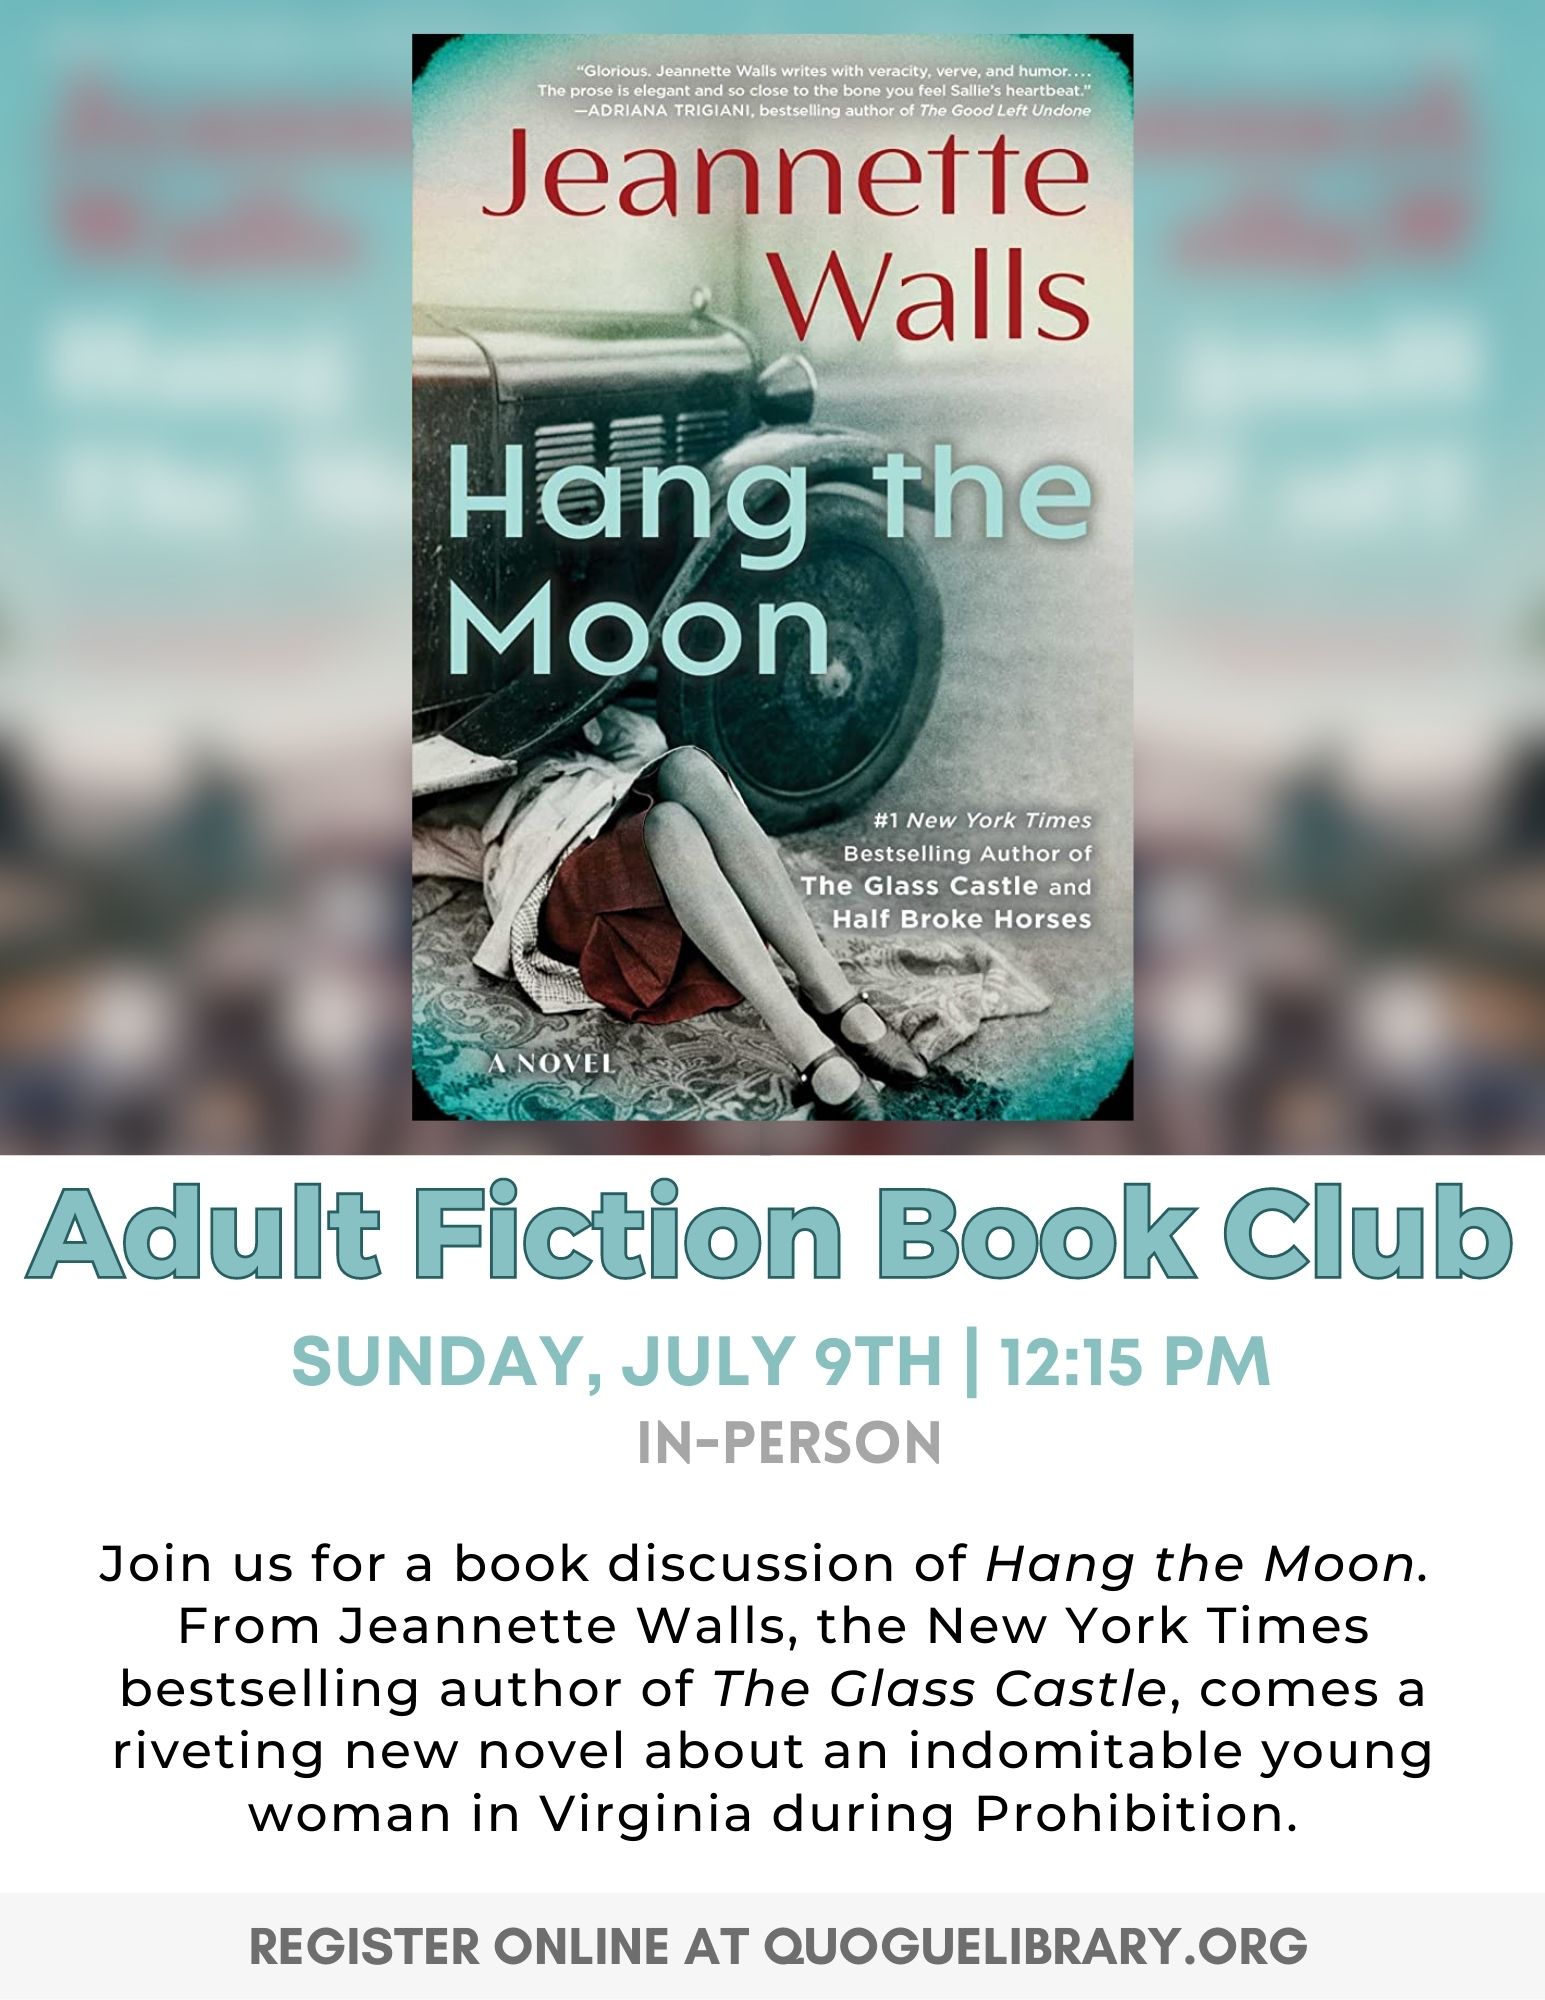 Adult Fiction Book Club